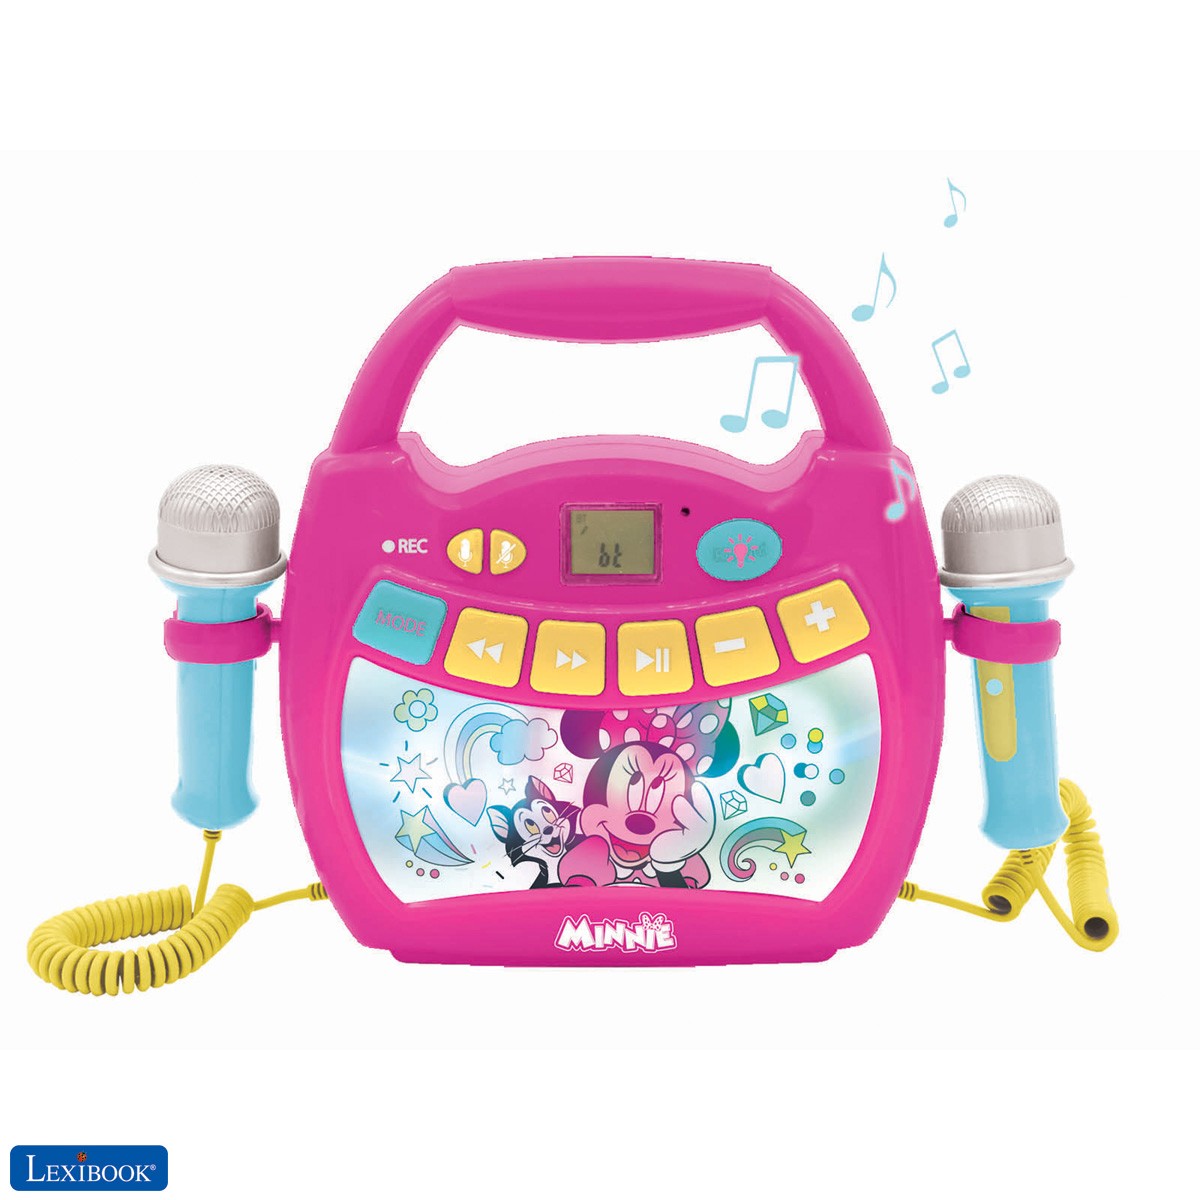 Disney Minnie - Lettore musicale karaoke portatile per bambini 